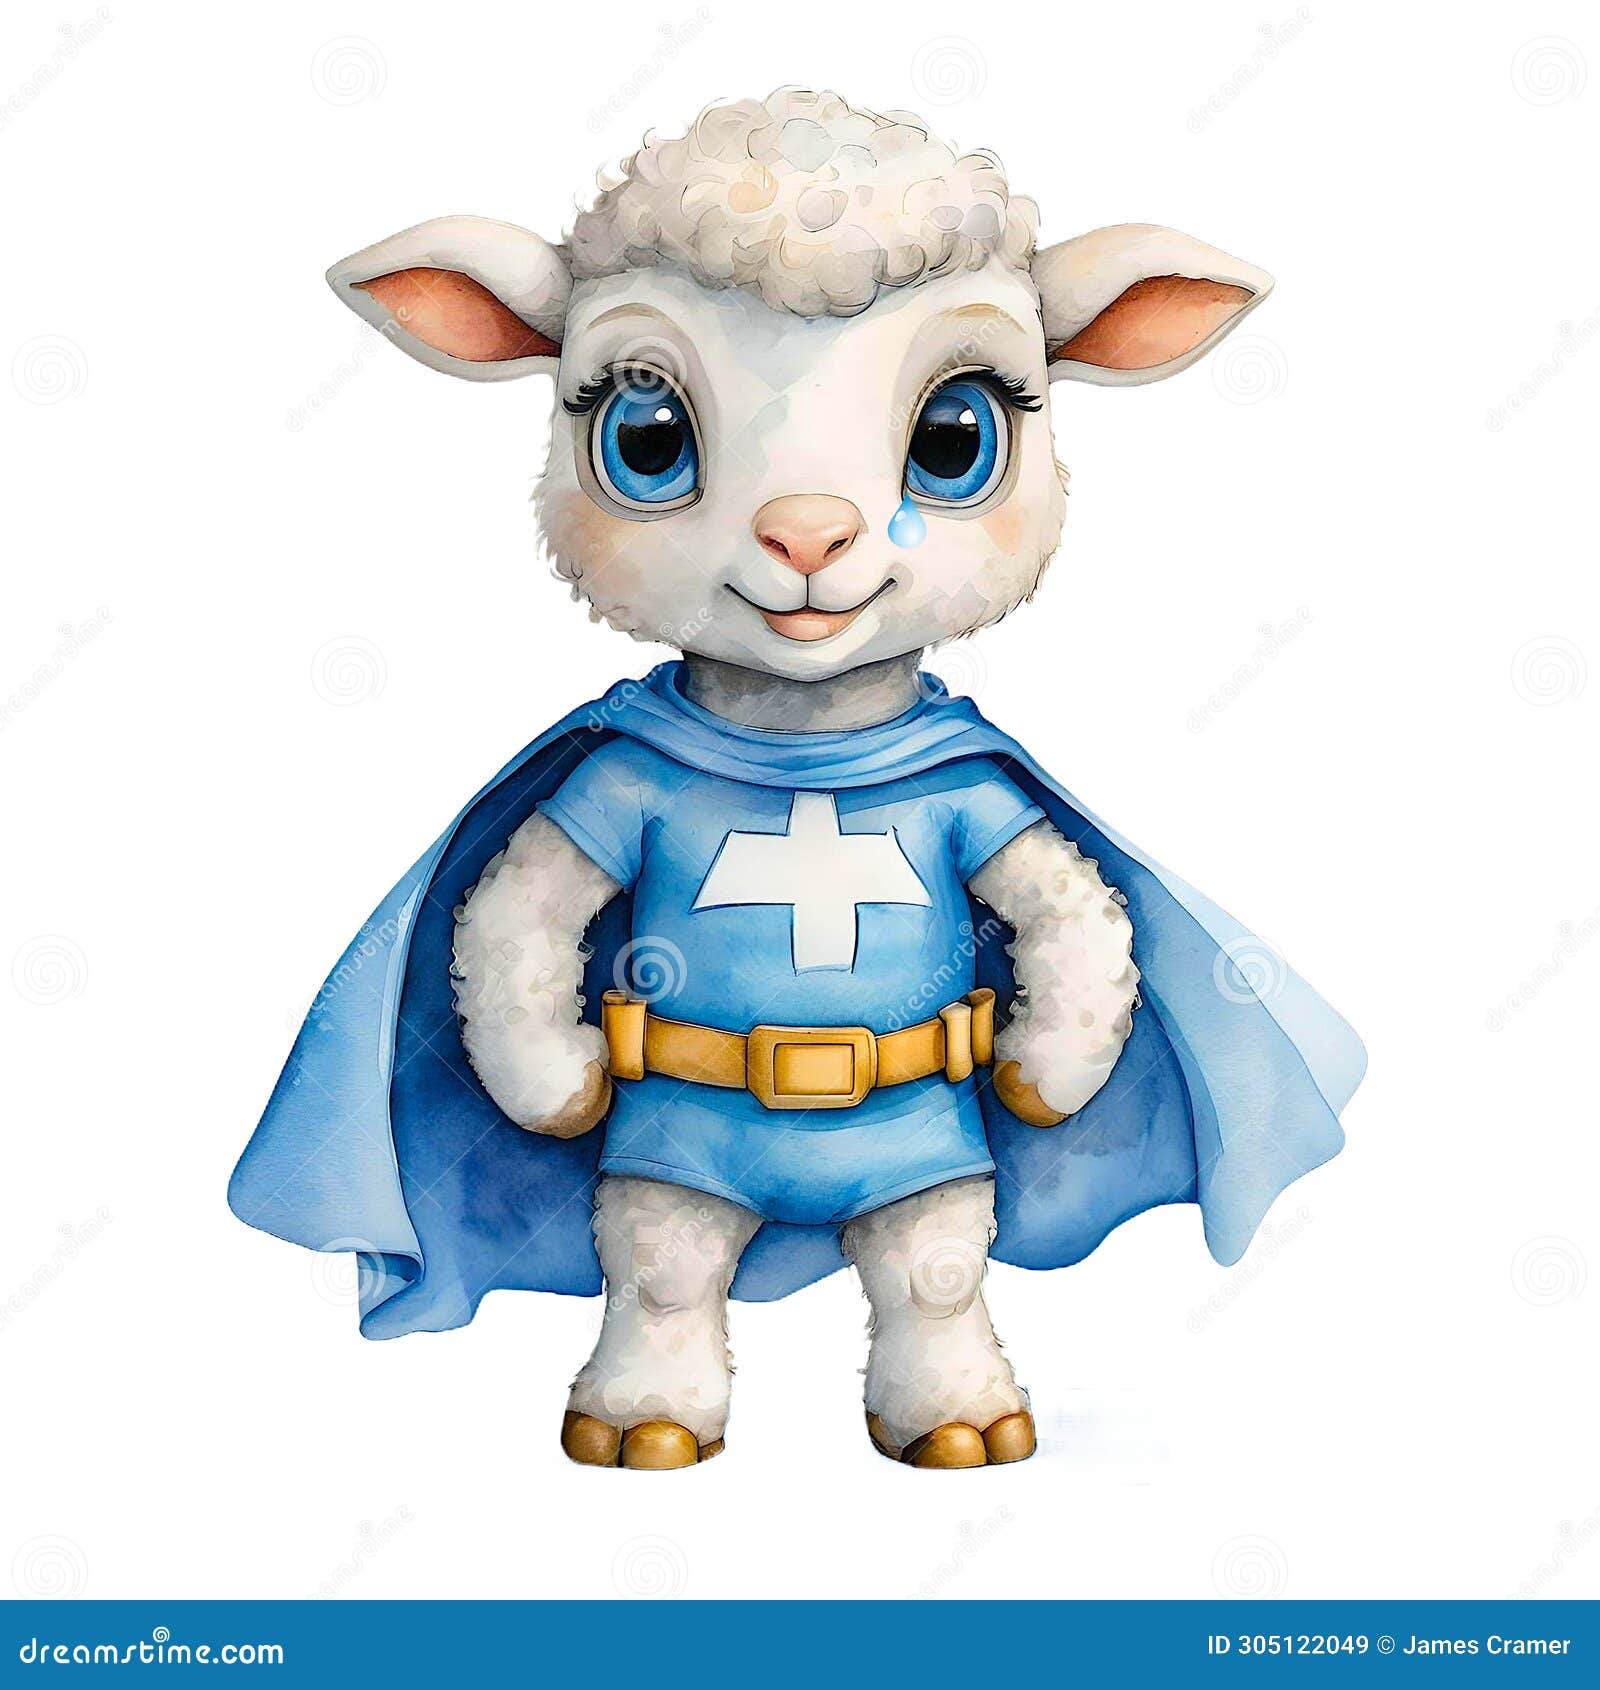 Halloweencostumes.com Baby Lamb Costume For Infants : Target